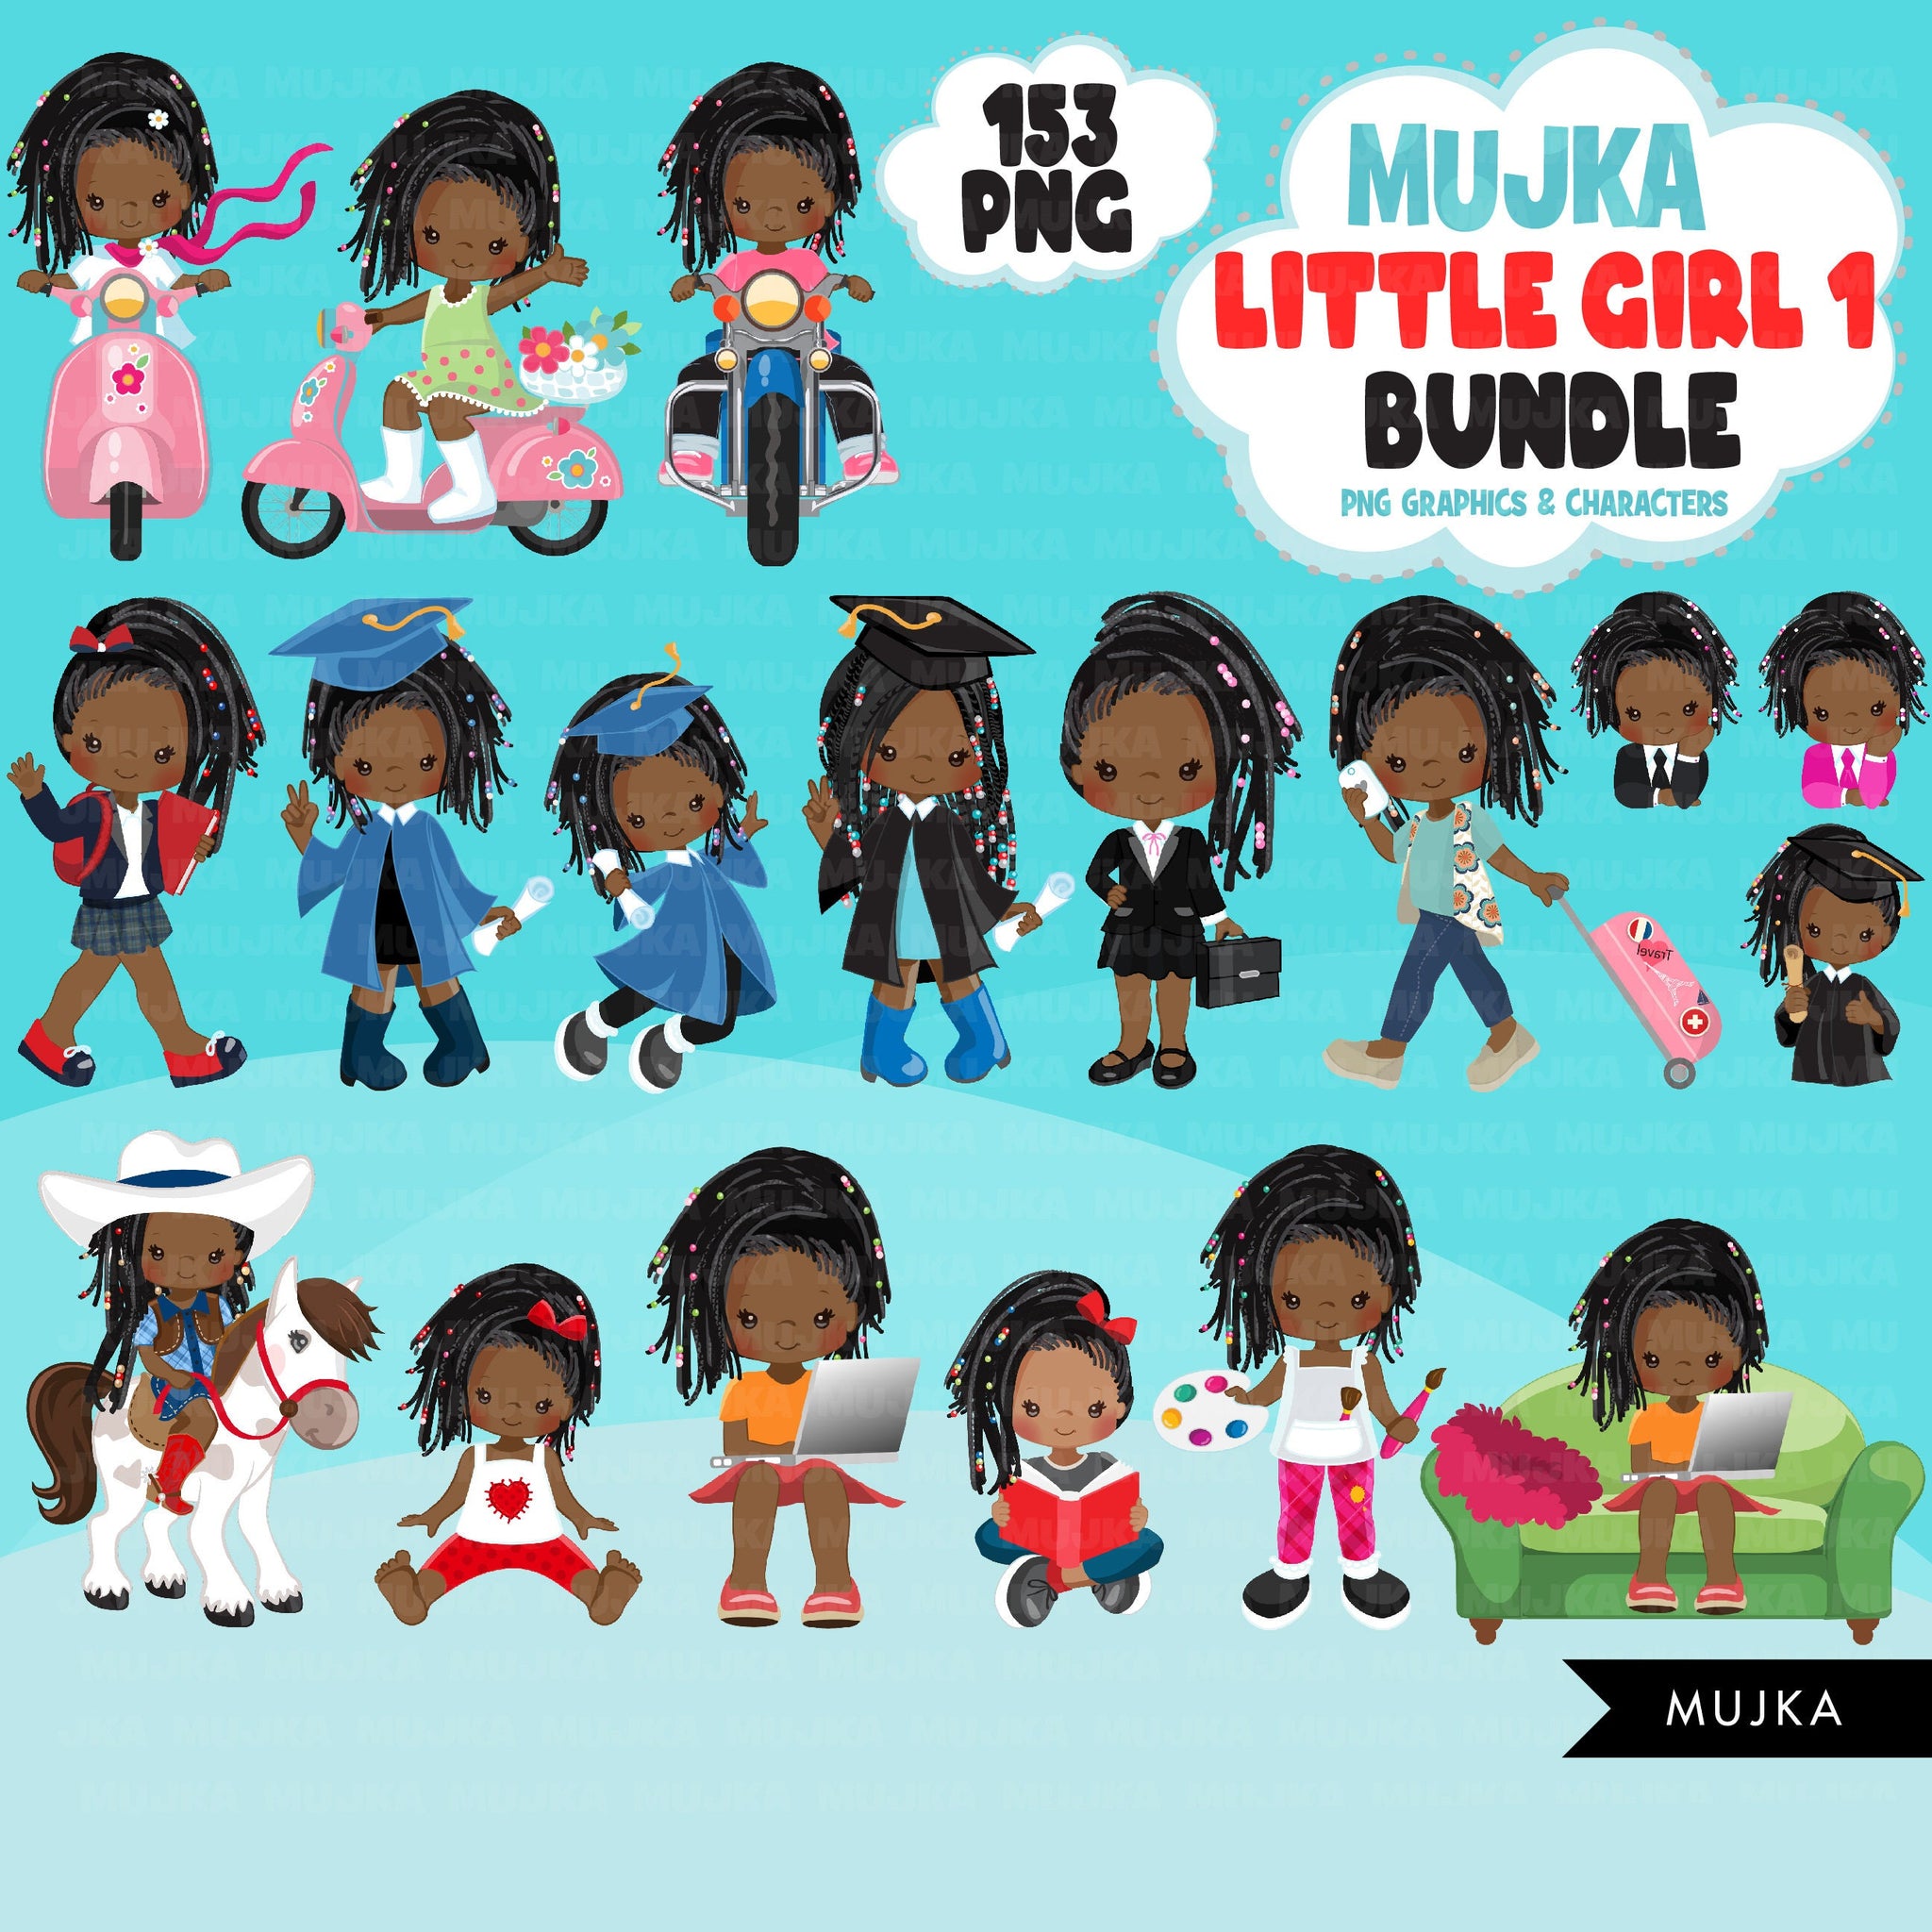 Black girl png Bundle, Black girl magic, black girl art, little girl digital stickers, dreadlocks, cute black girl bundle, planner stickers